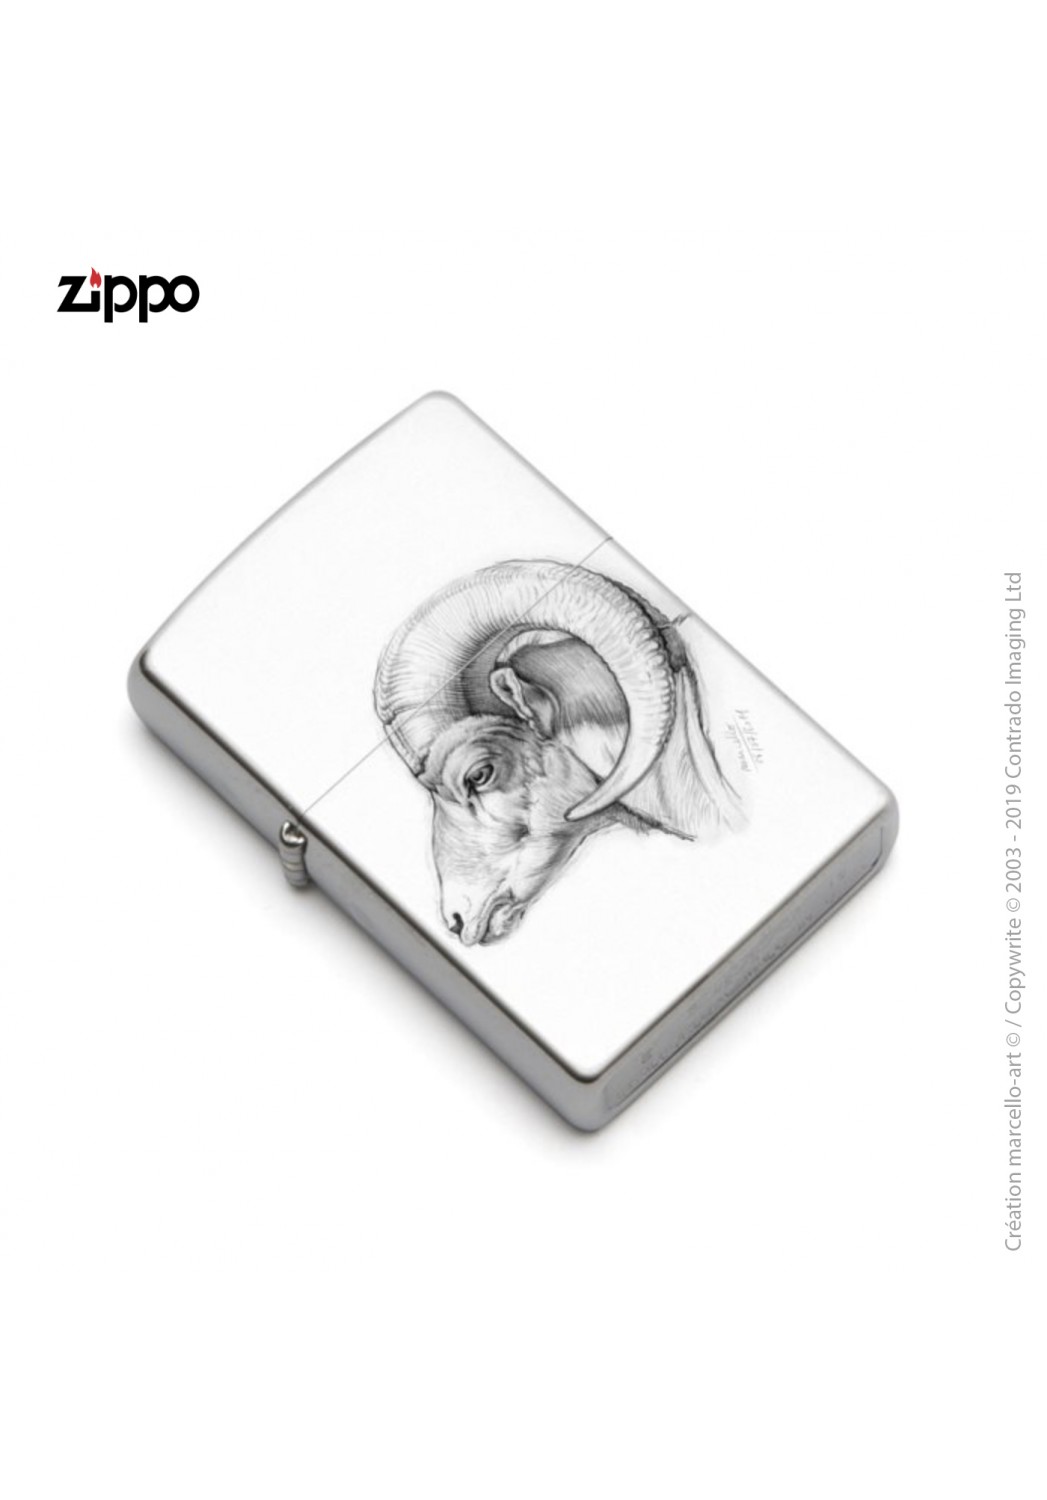 Marcello-art: Decoration accessoiries Zippo 51 bighorn sheep